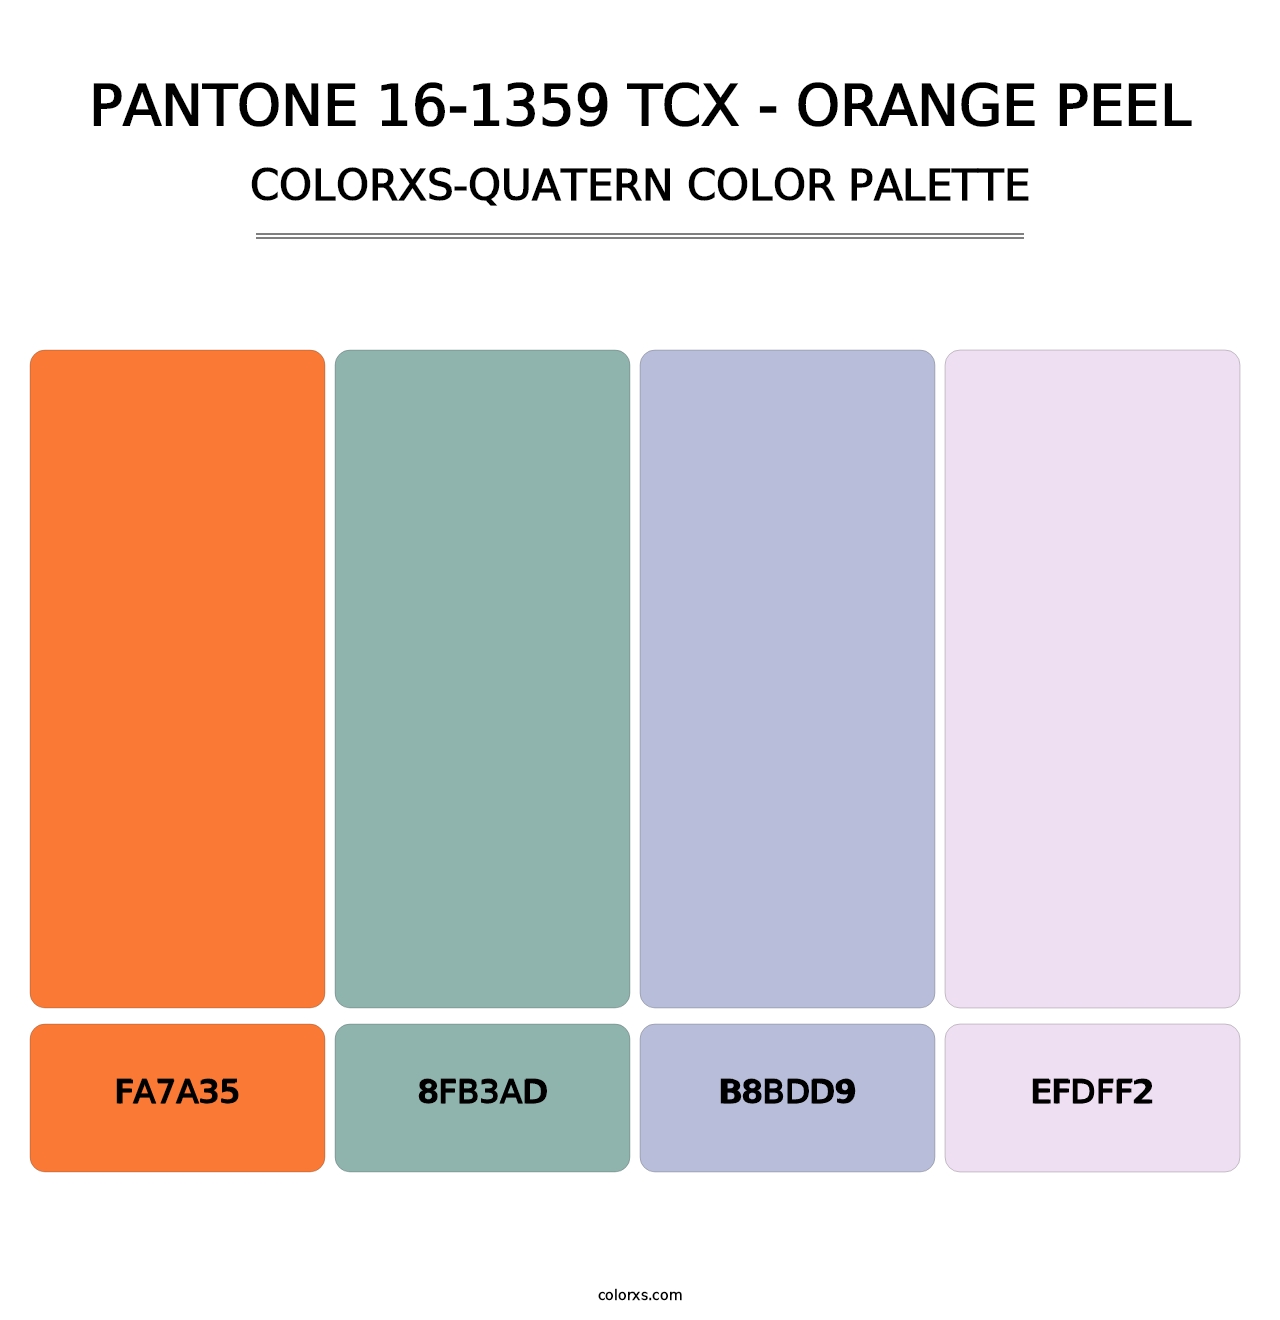 PANTONE 16-1359 TCX - Orange Peel - Colorxs Quatern Palette